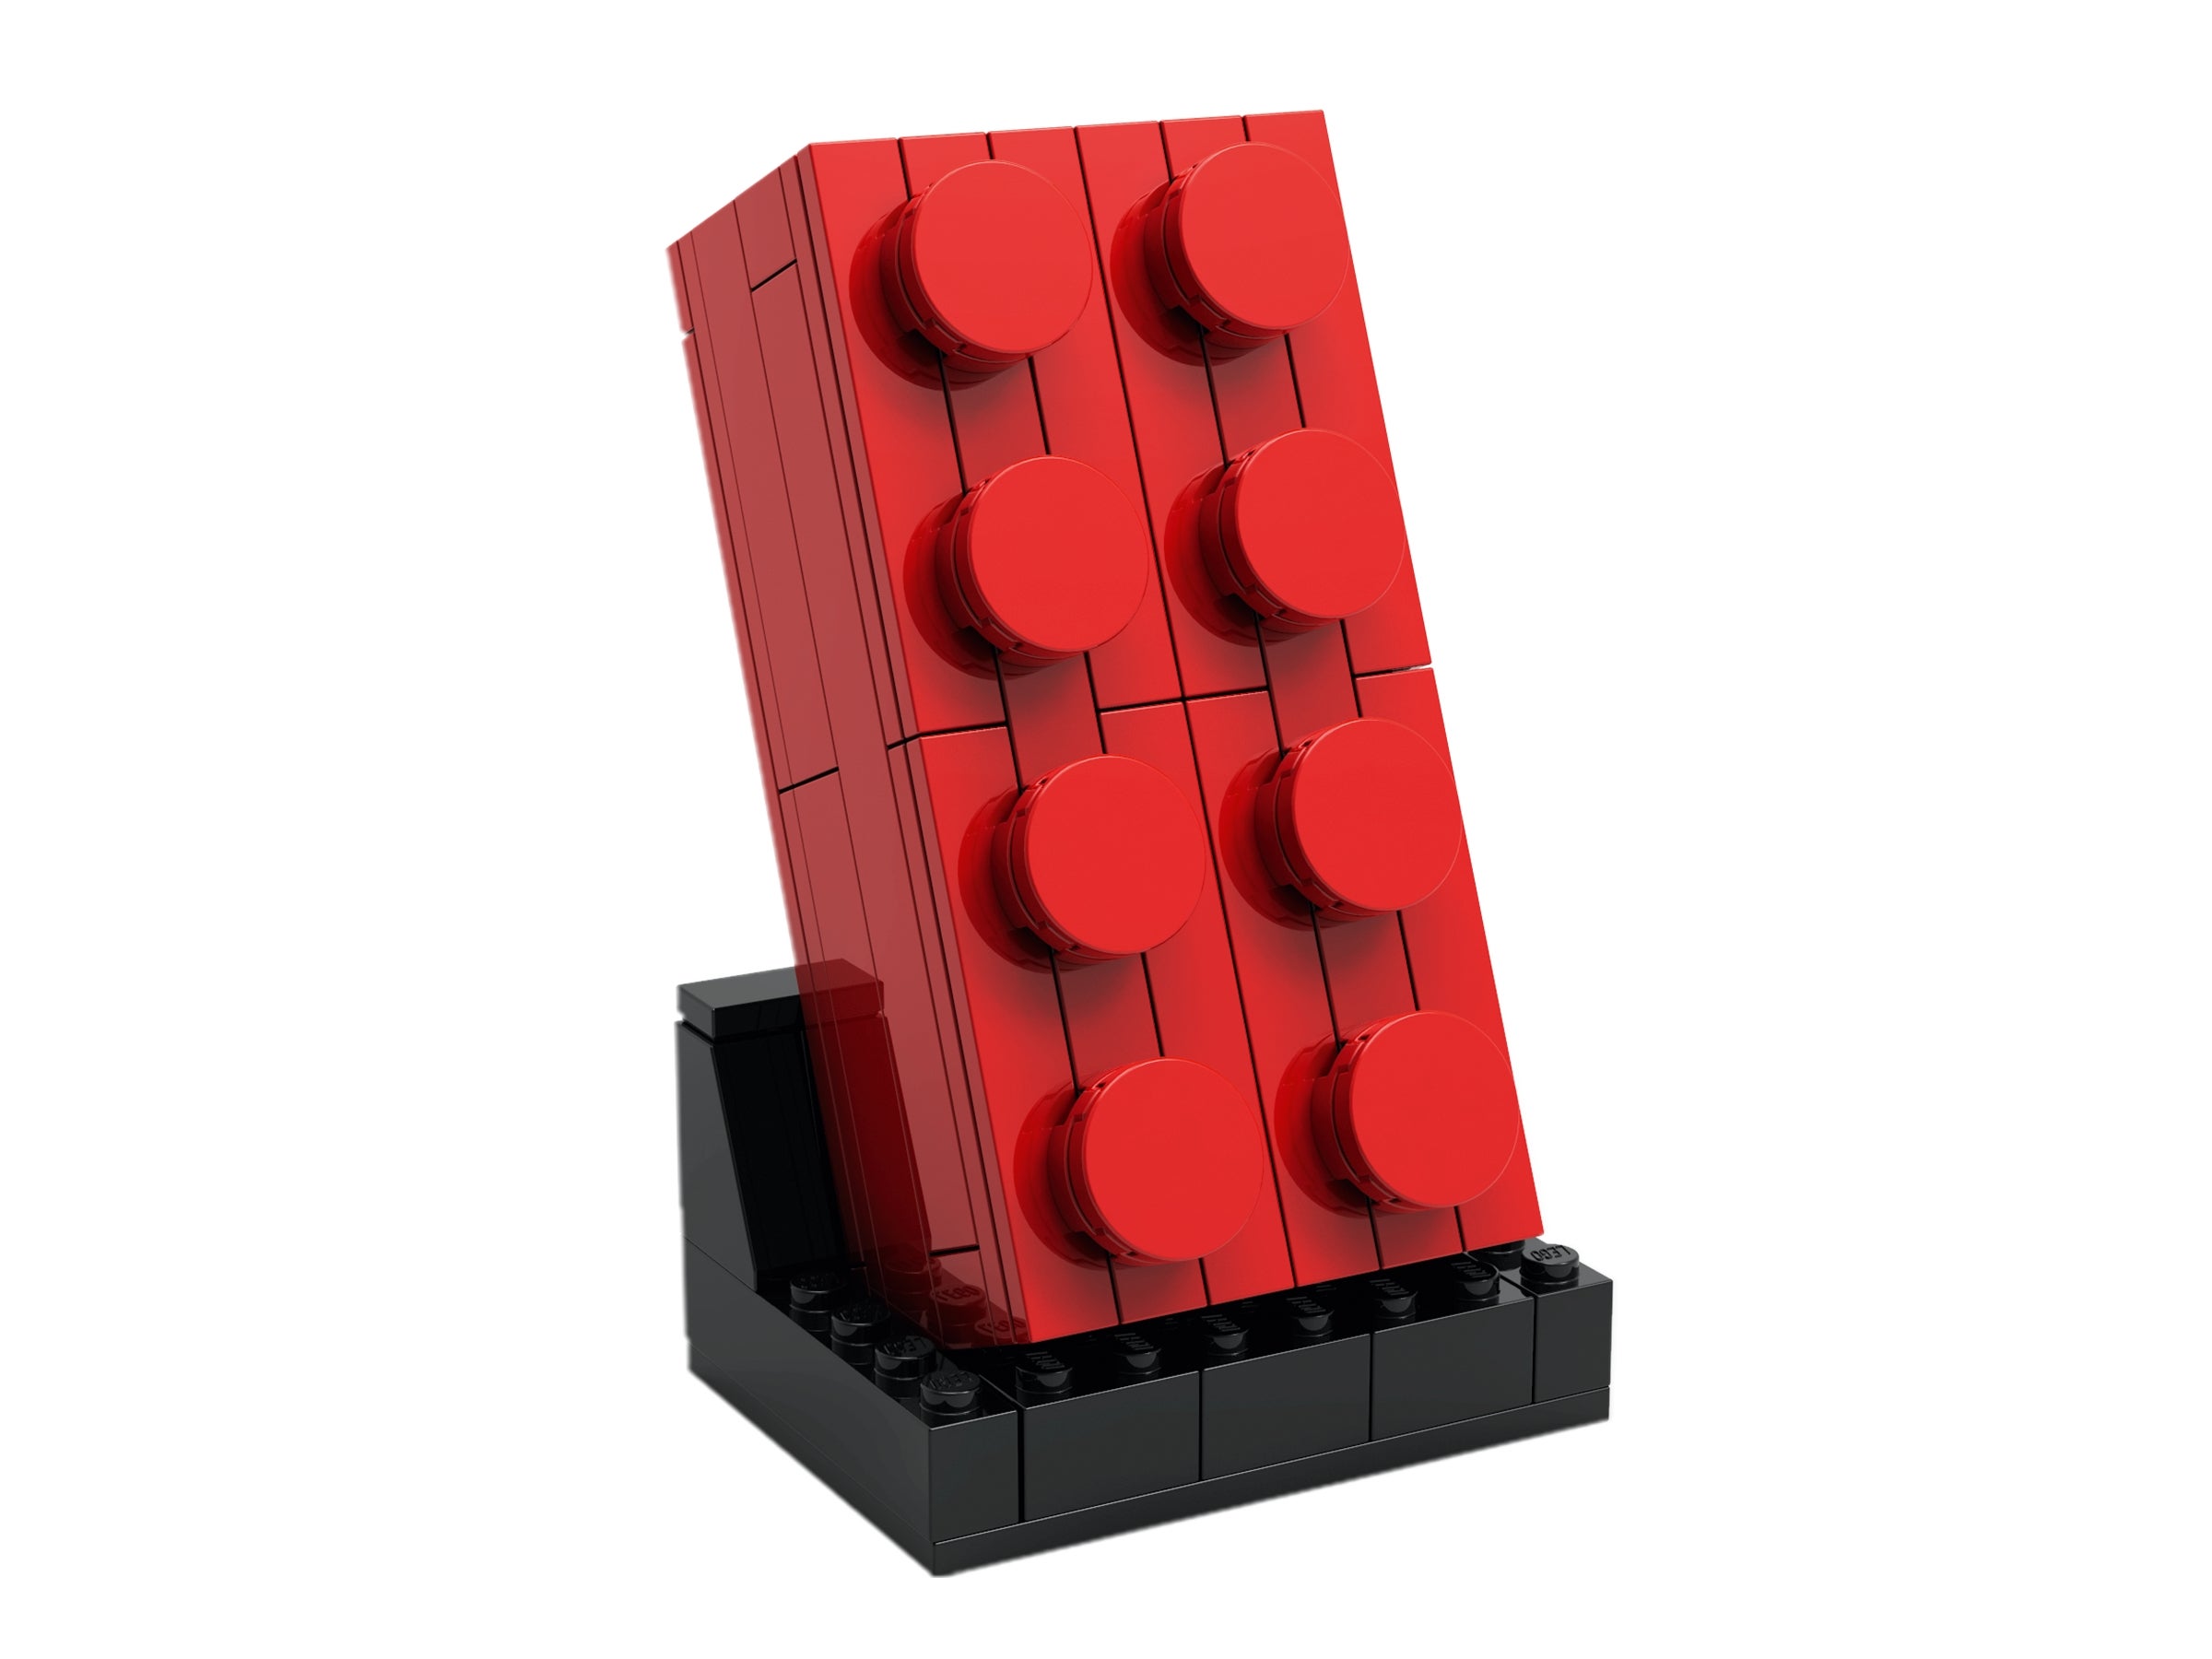 Lego 4x Stein 1x6 Dunkel Rot Dark Red Brick 3009 Neuware New